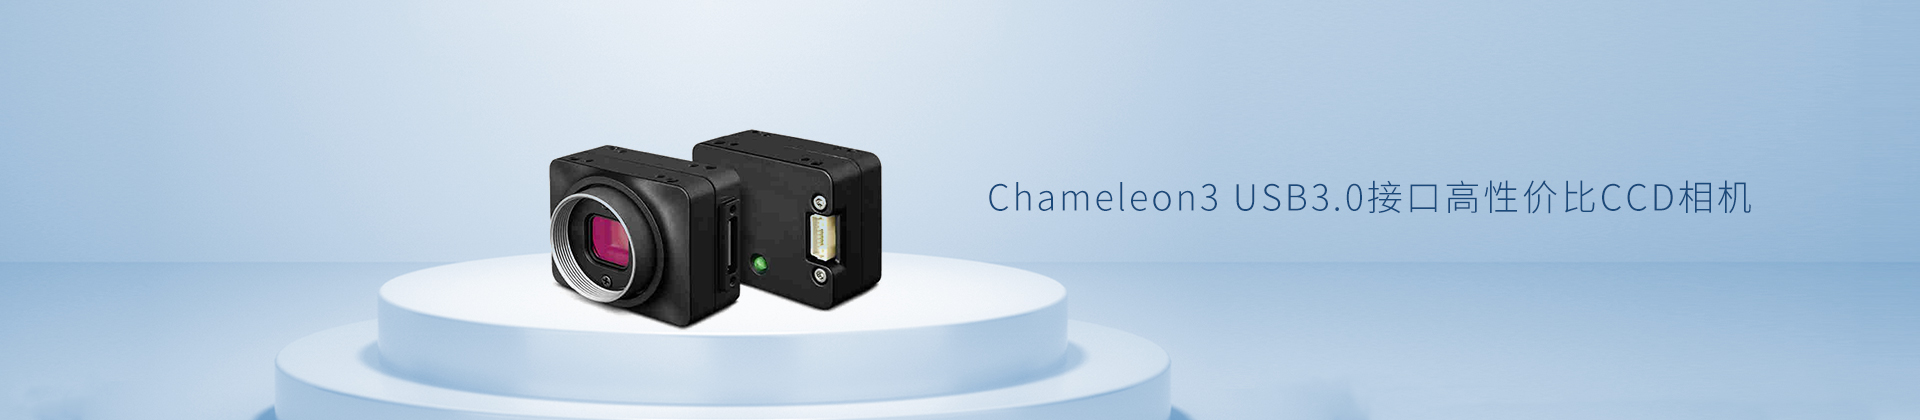 Chameleon3 USB3.0接口高性价比CCD相机